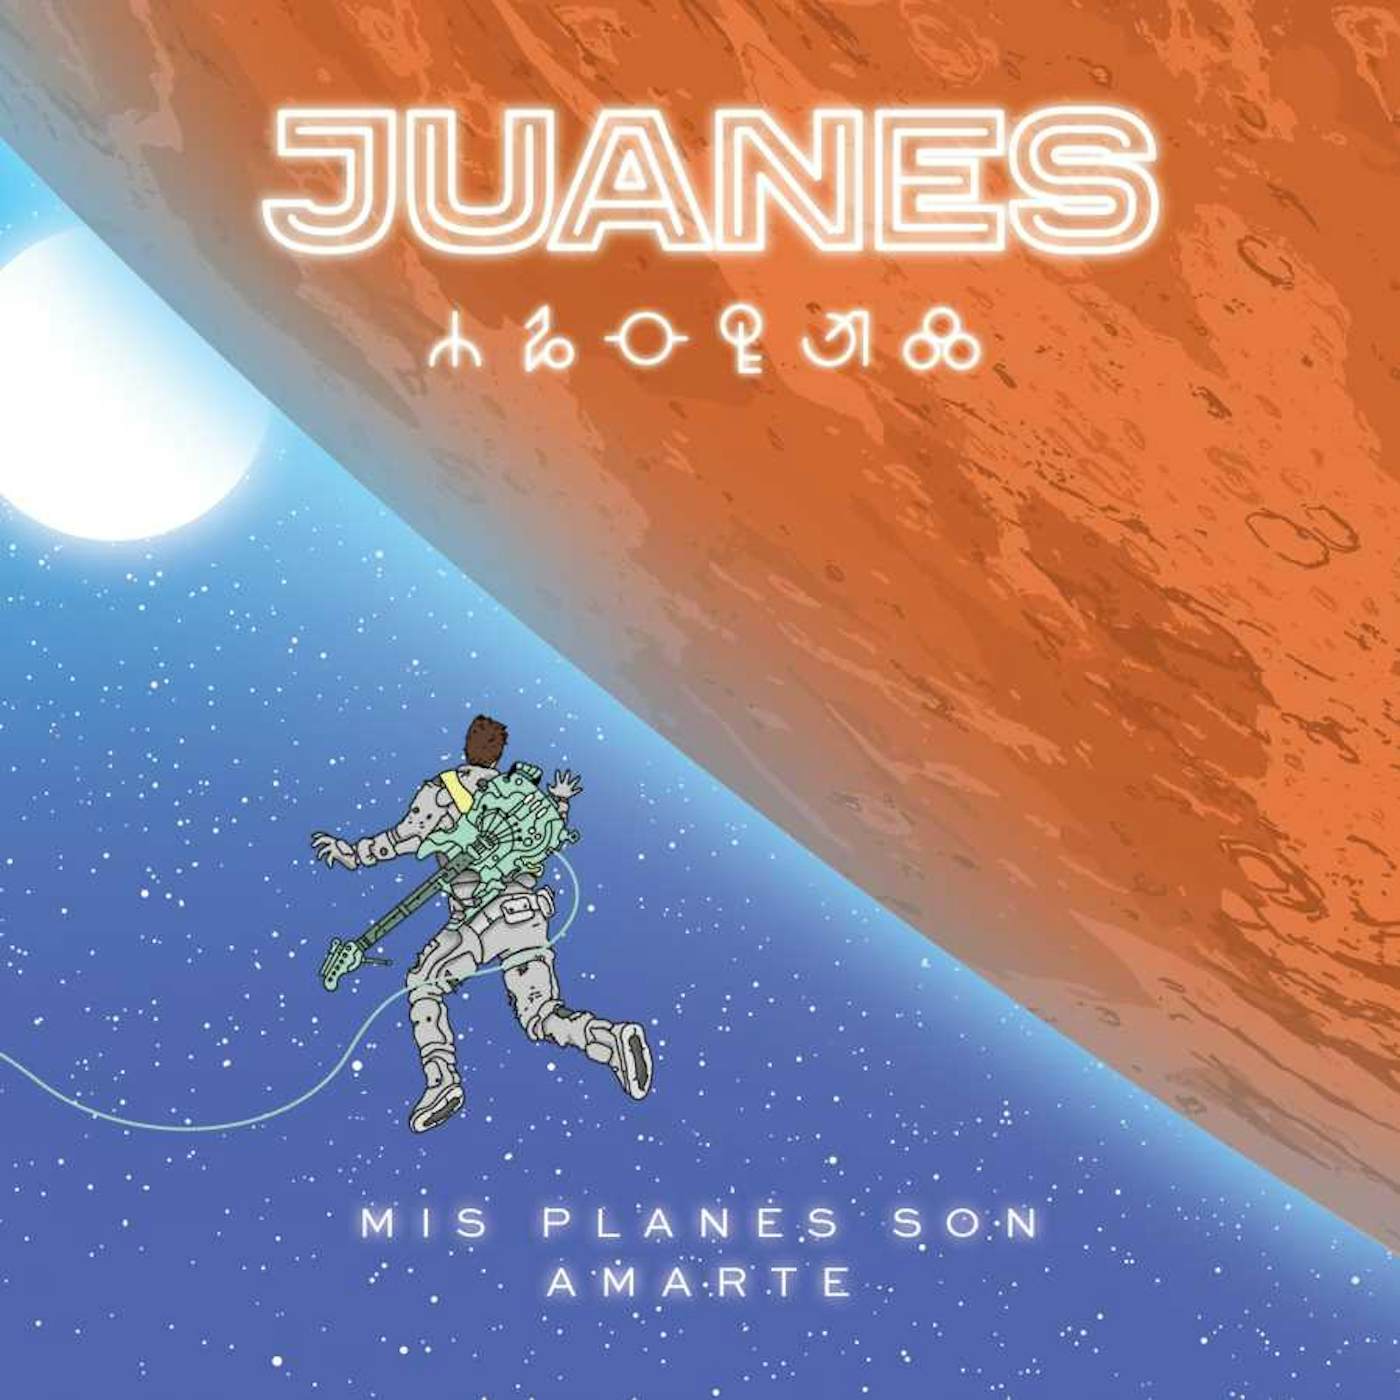 Juanes Mis Planes Son Amarte (LP) Vinyl Record